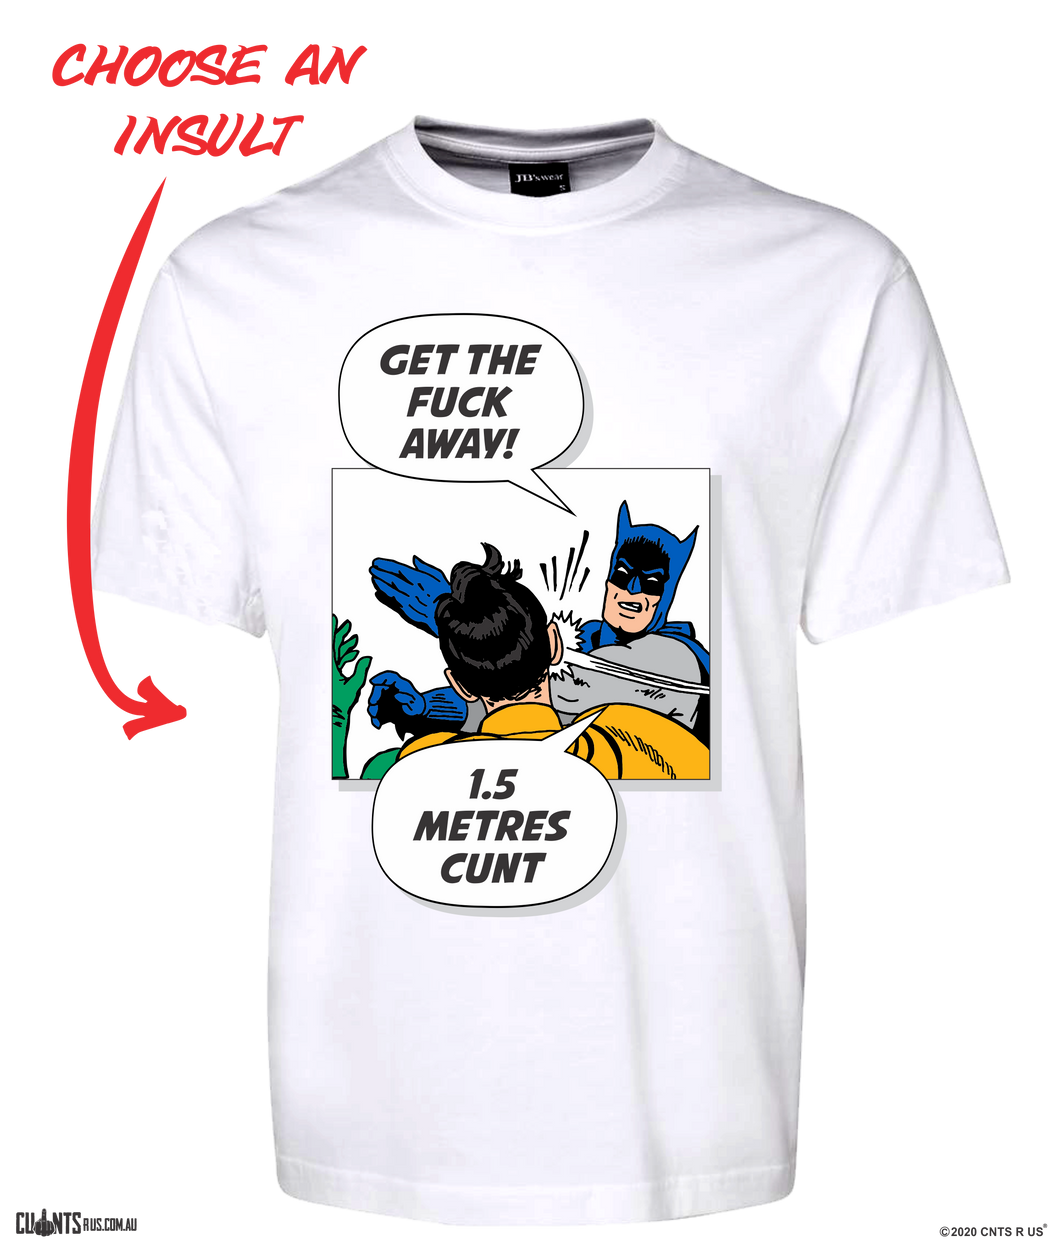 Get The Fuck Away 1.5 Metres Cunt Tee Batman T-Shirt CRU01-1HT-24000